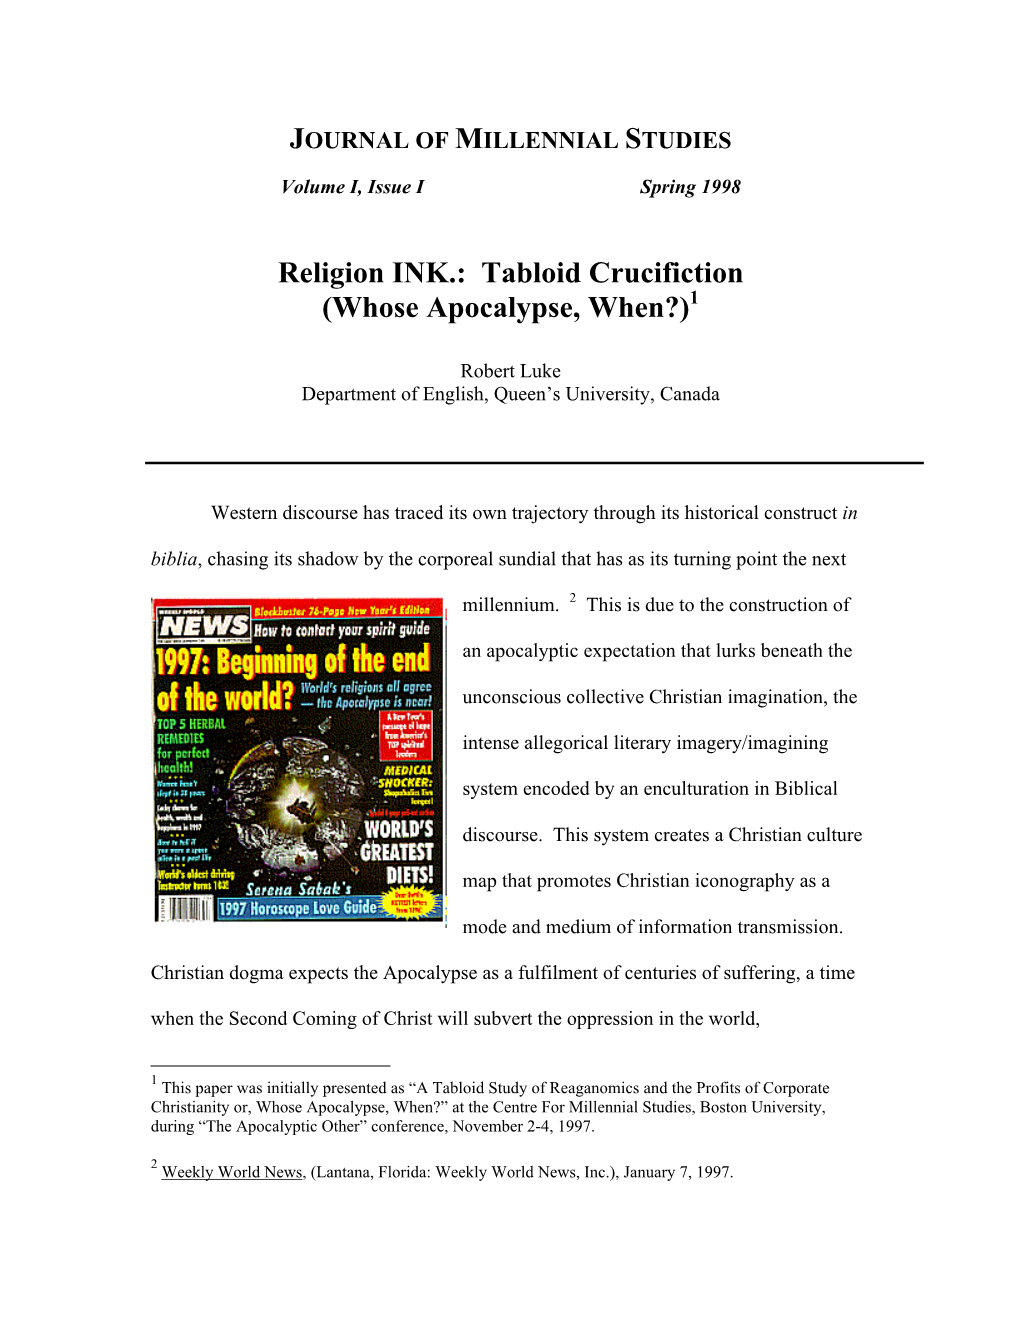 Religion INK.: Tabloid Crucifiction (Whose Apocalypse, When?)1